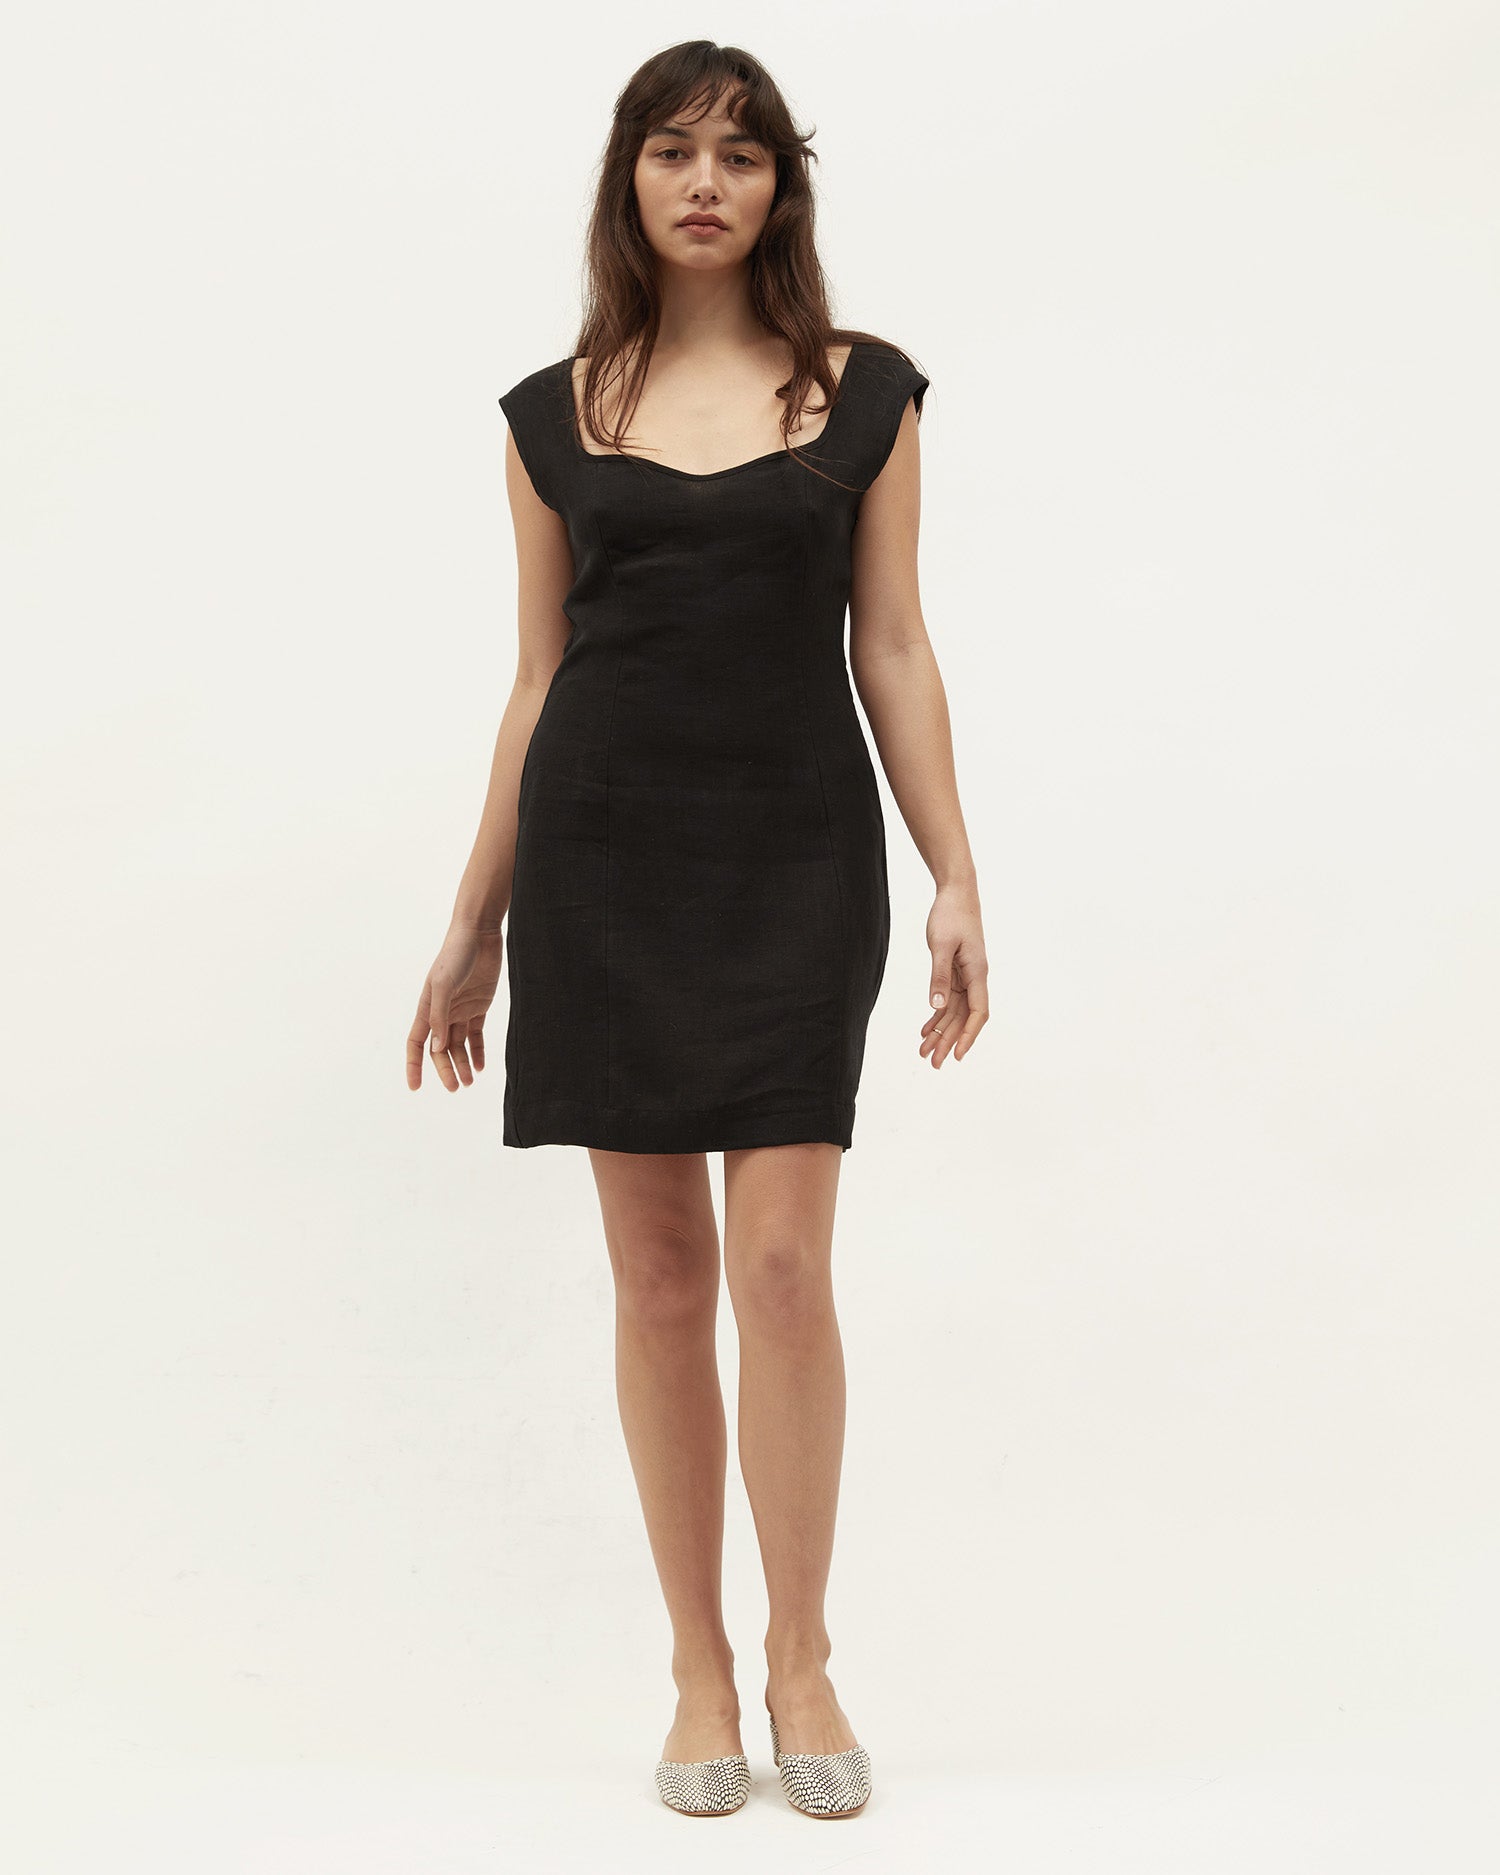 Confidently Lost Minidress | Black $290